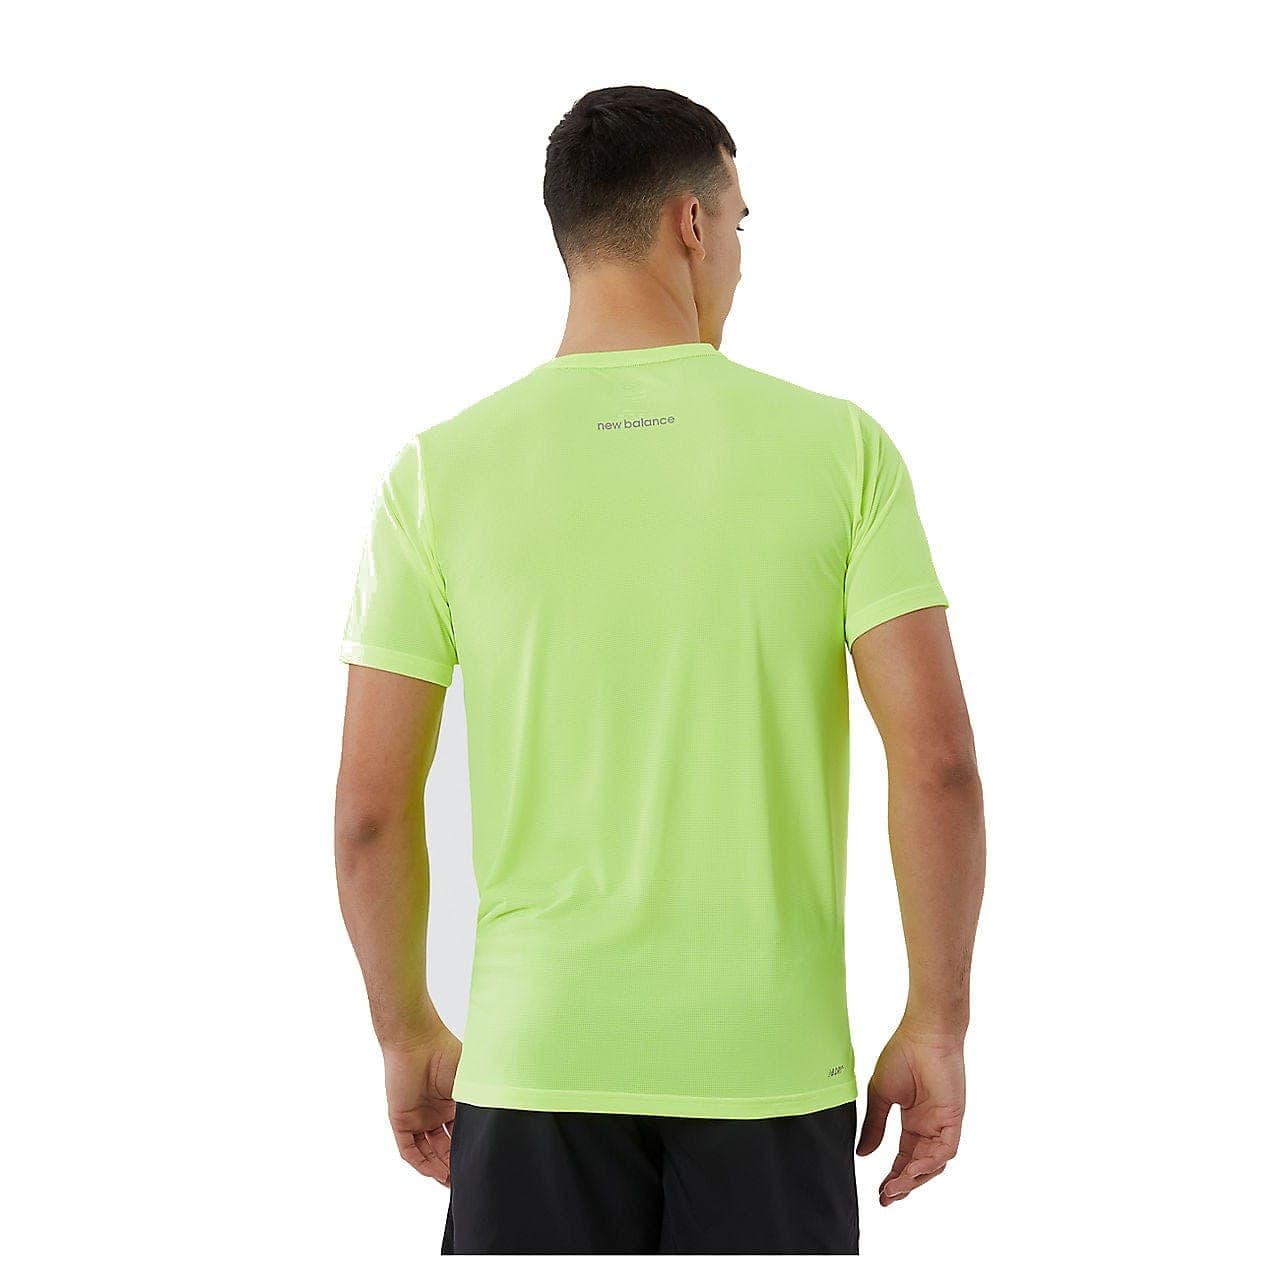 New Balance Accelerate Short Sleeve T Shirt (Men's) - Hi lite